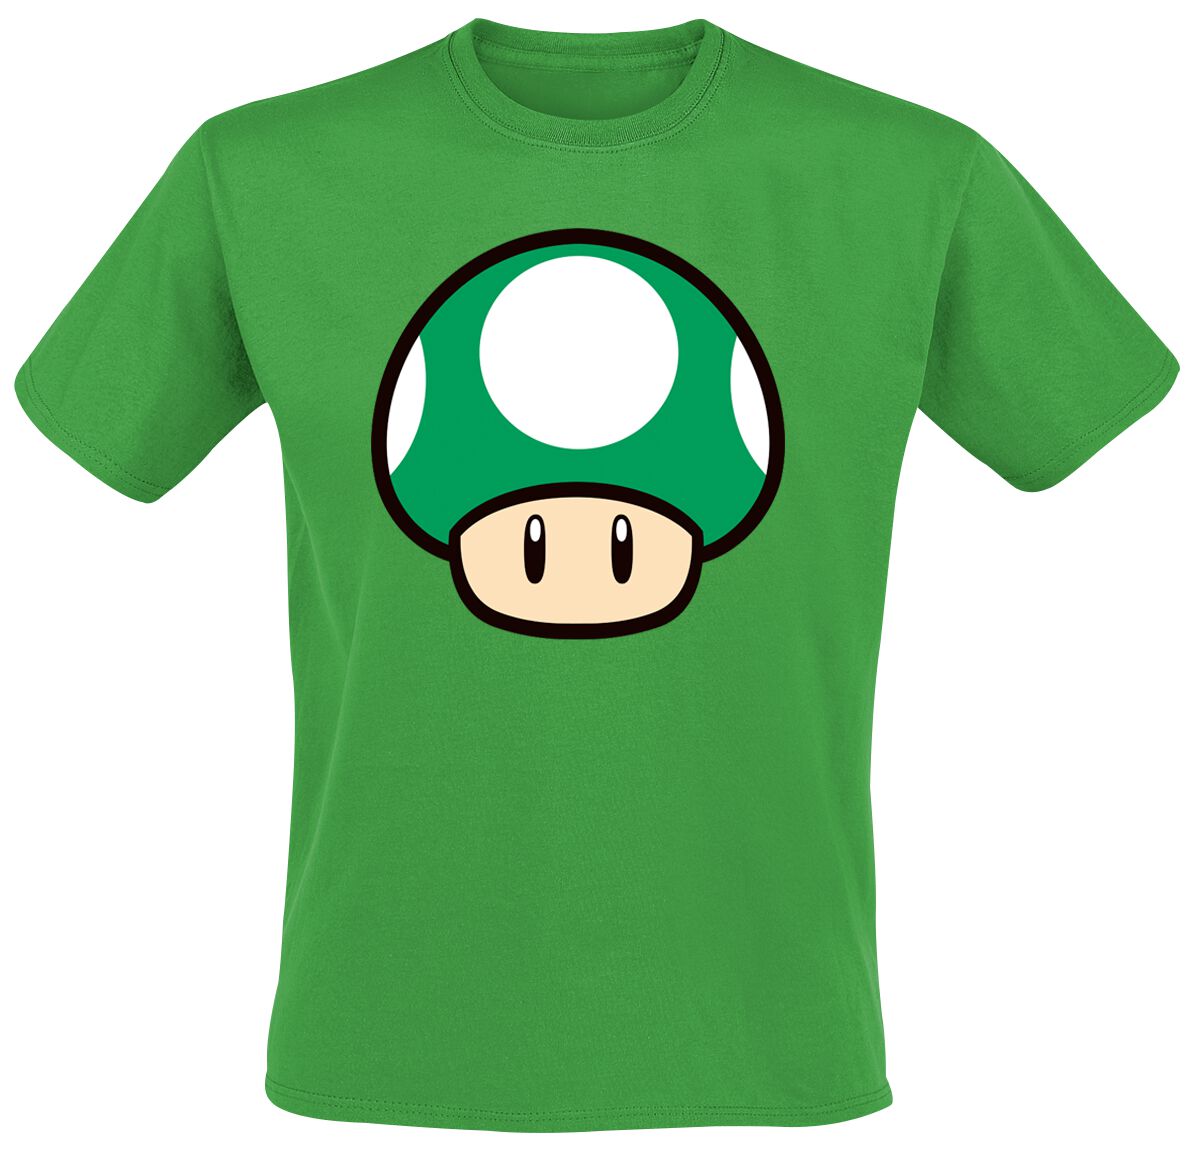 Super Mario Mushroom T-Shirt grün in M